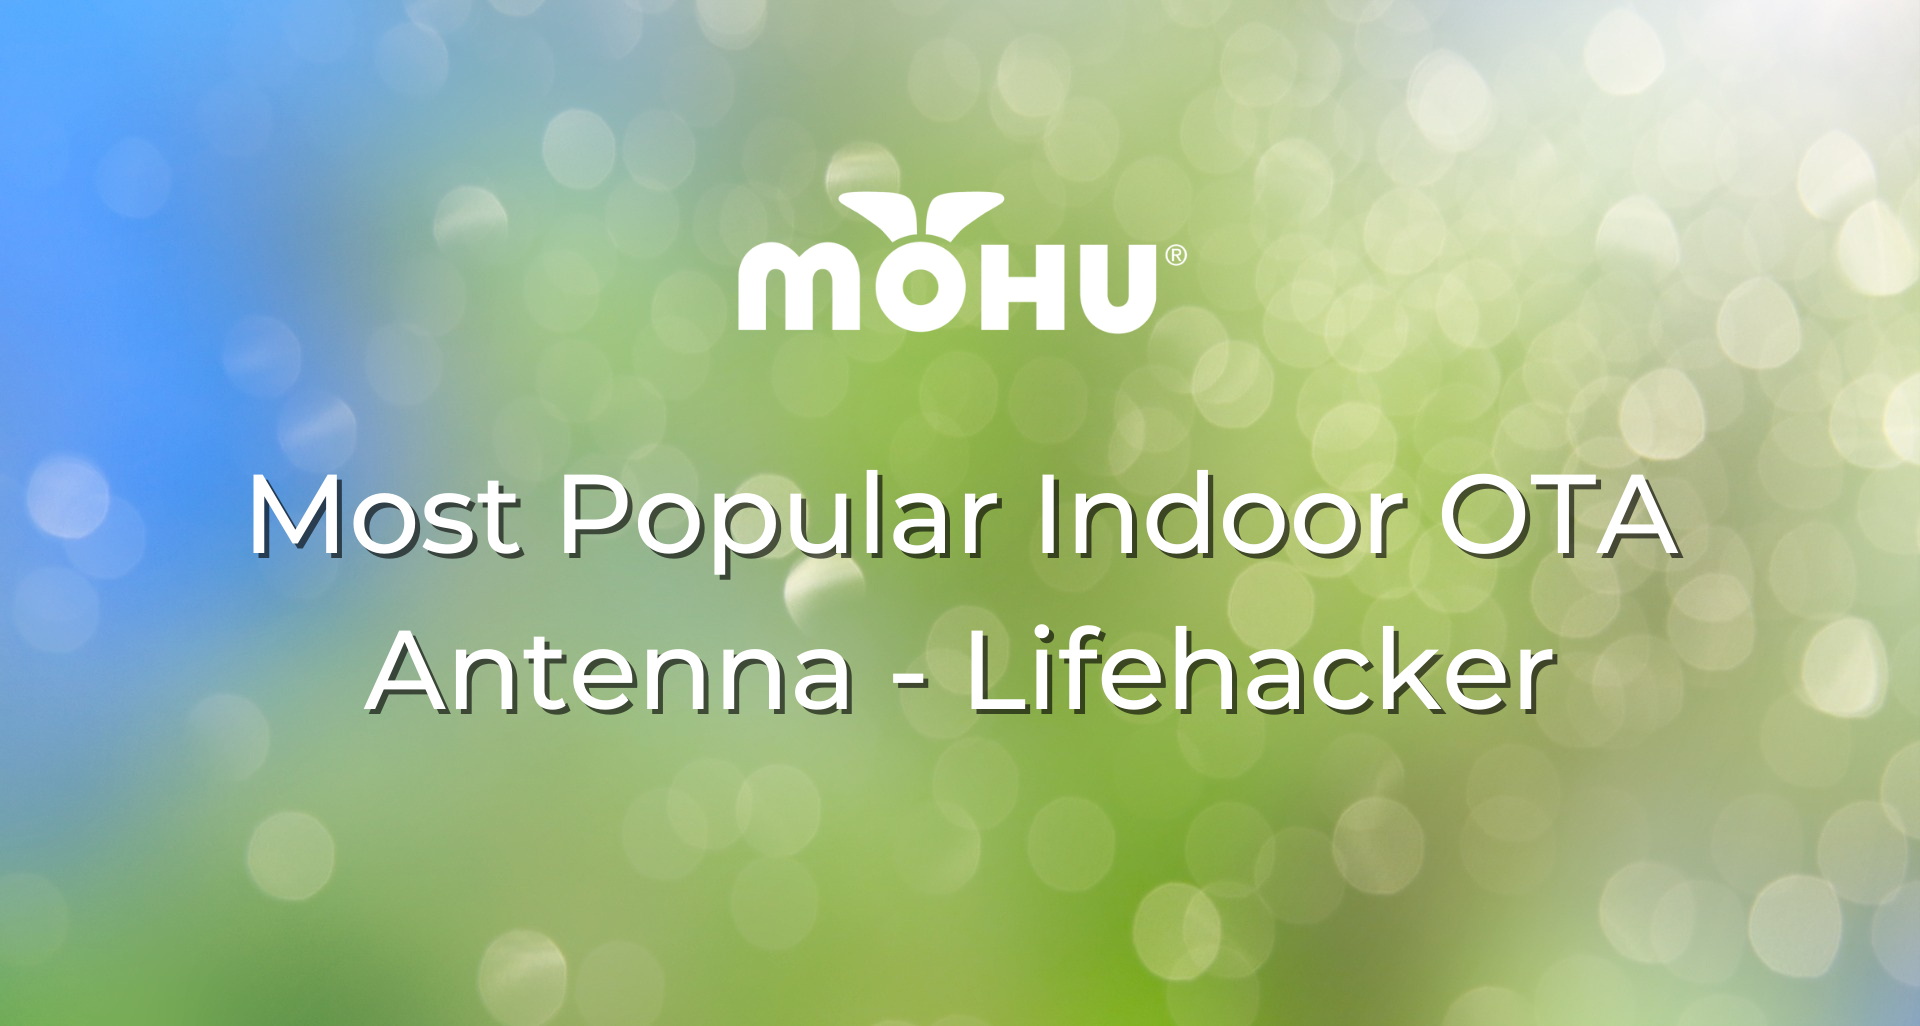 Most Popular Indoor OTA Antenna - Lifehacker, Mohu